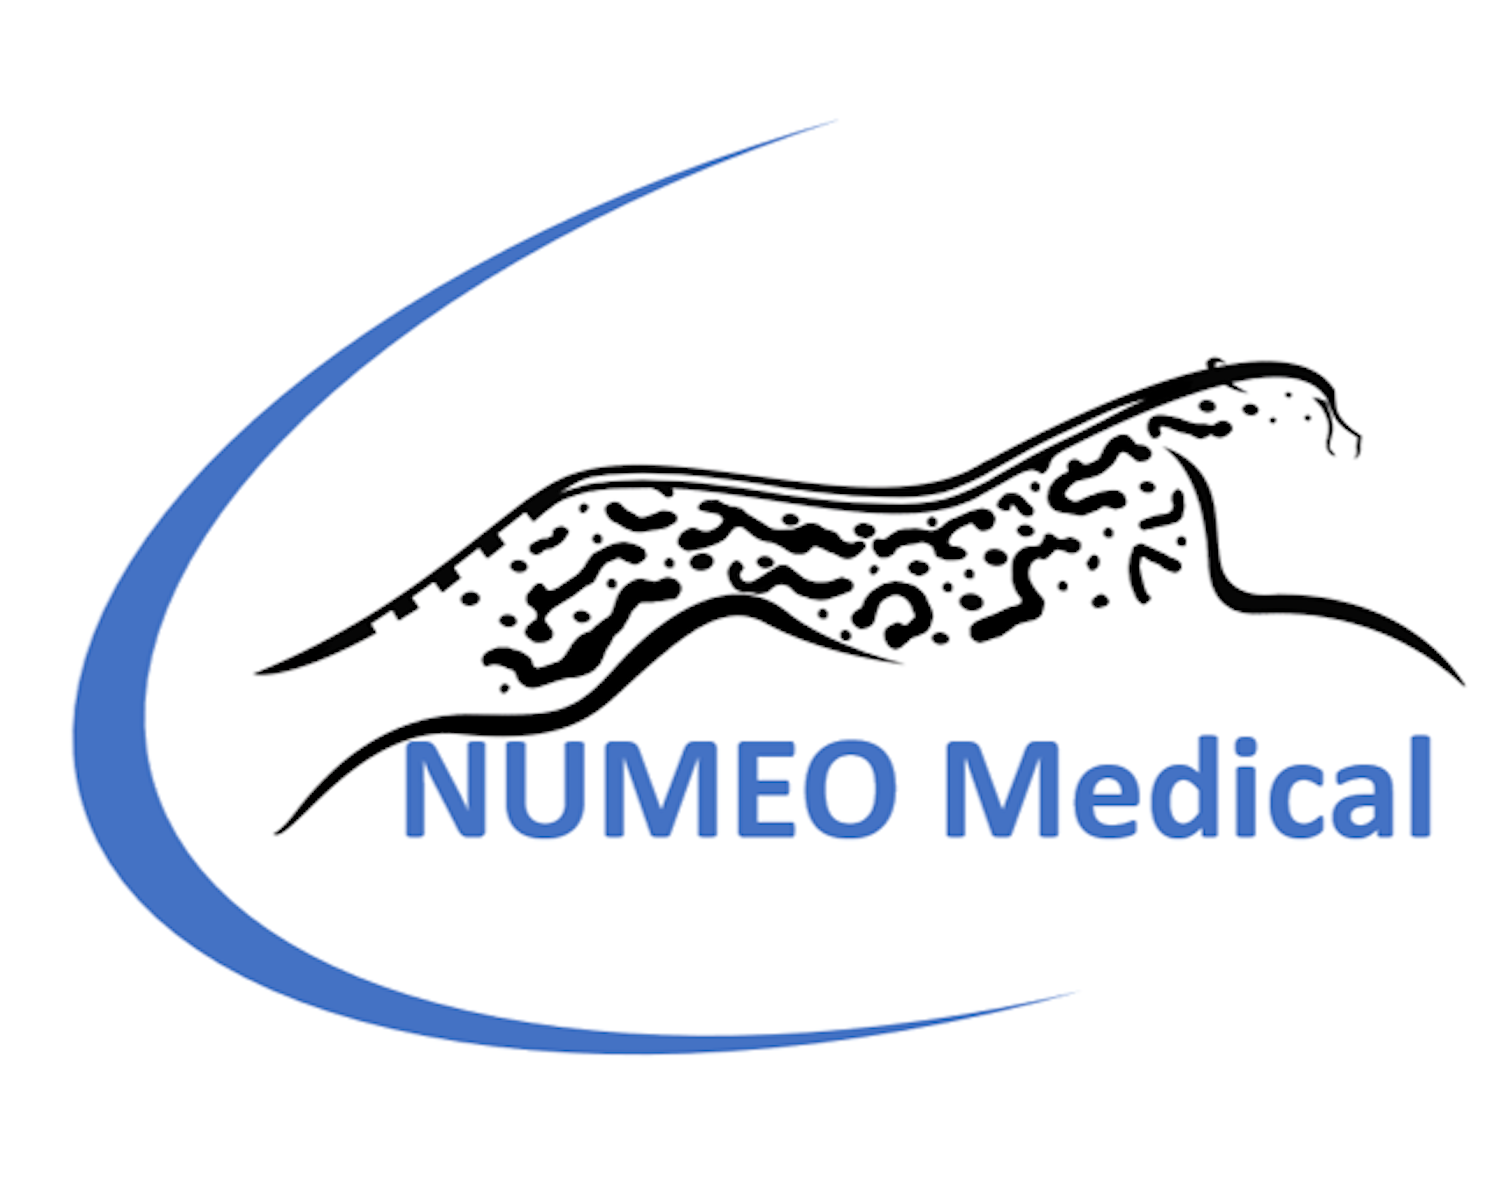 NUMEO Medical